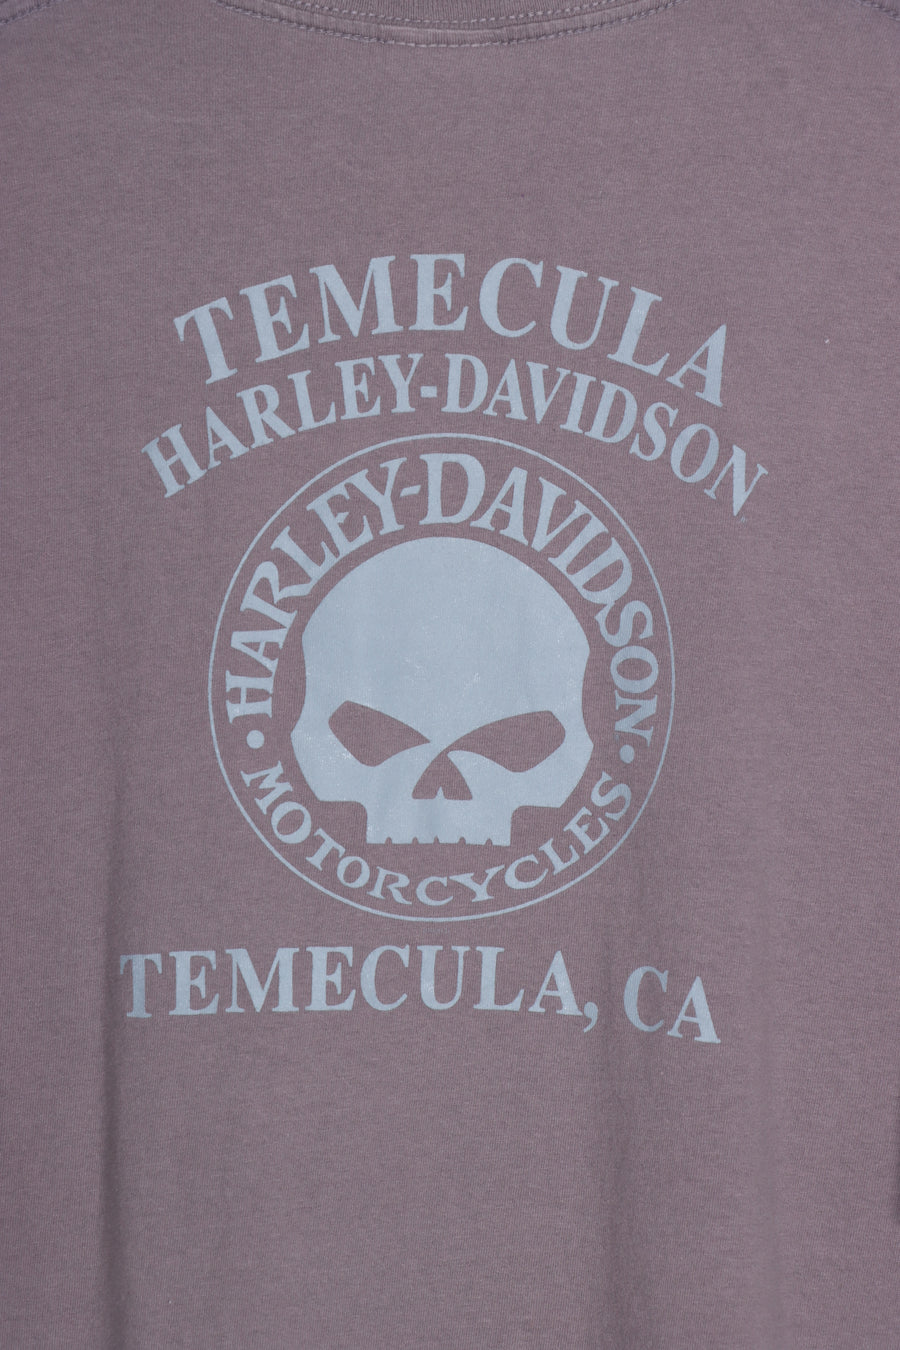 HARLEY DAVIDSON Temecula California Front & Back Tee (XXL)